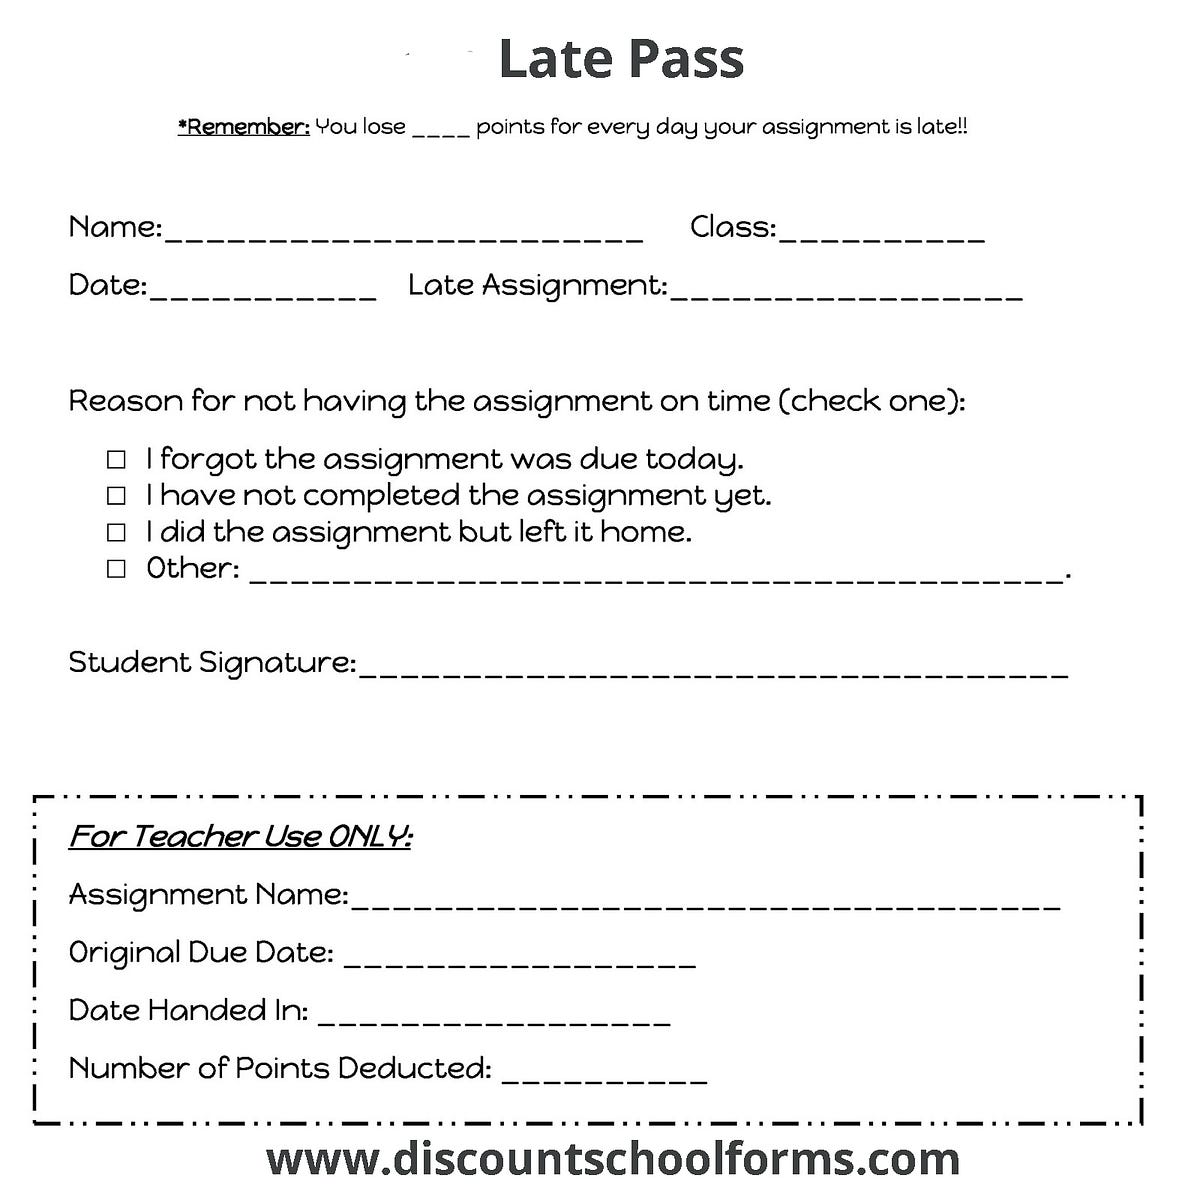 late-pass-printing-discount-school-forms-medium